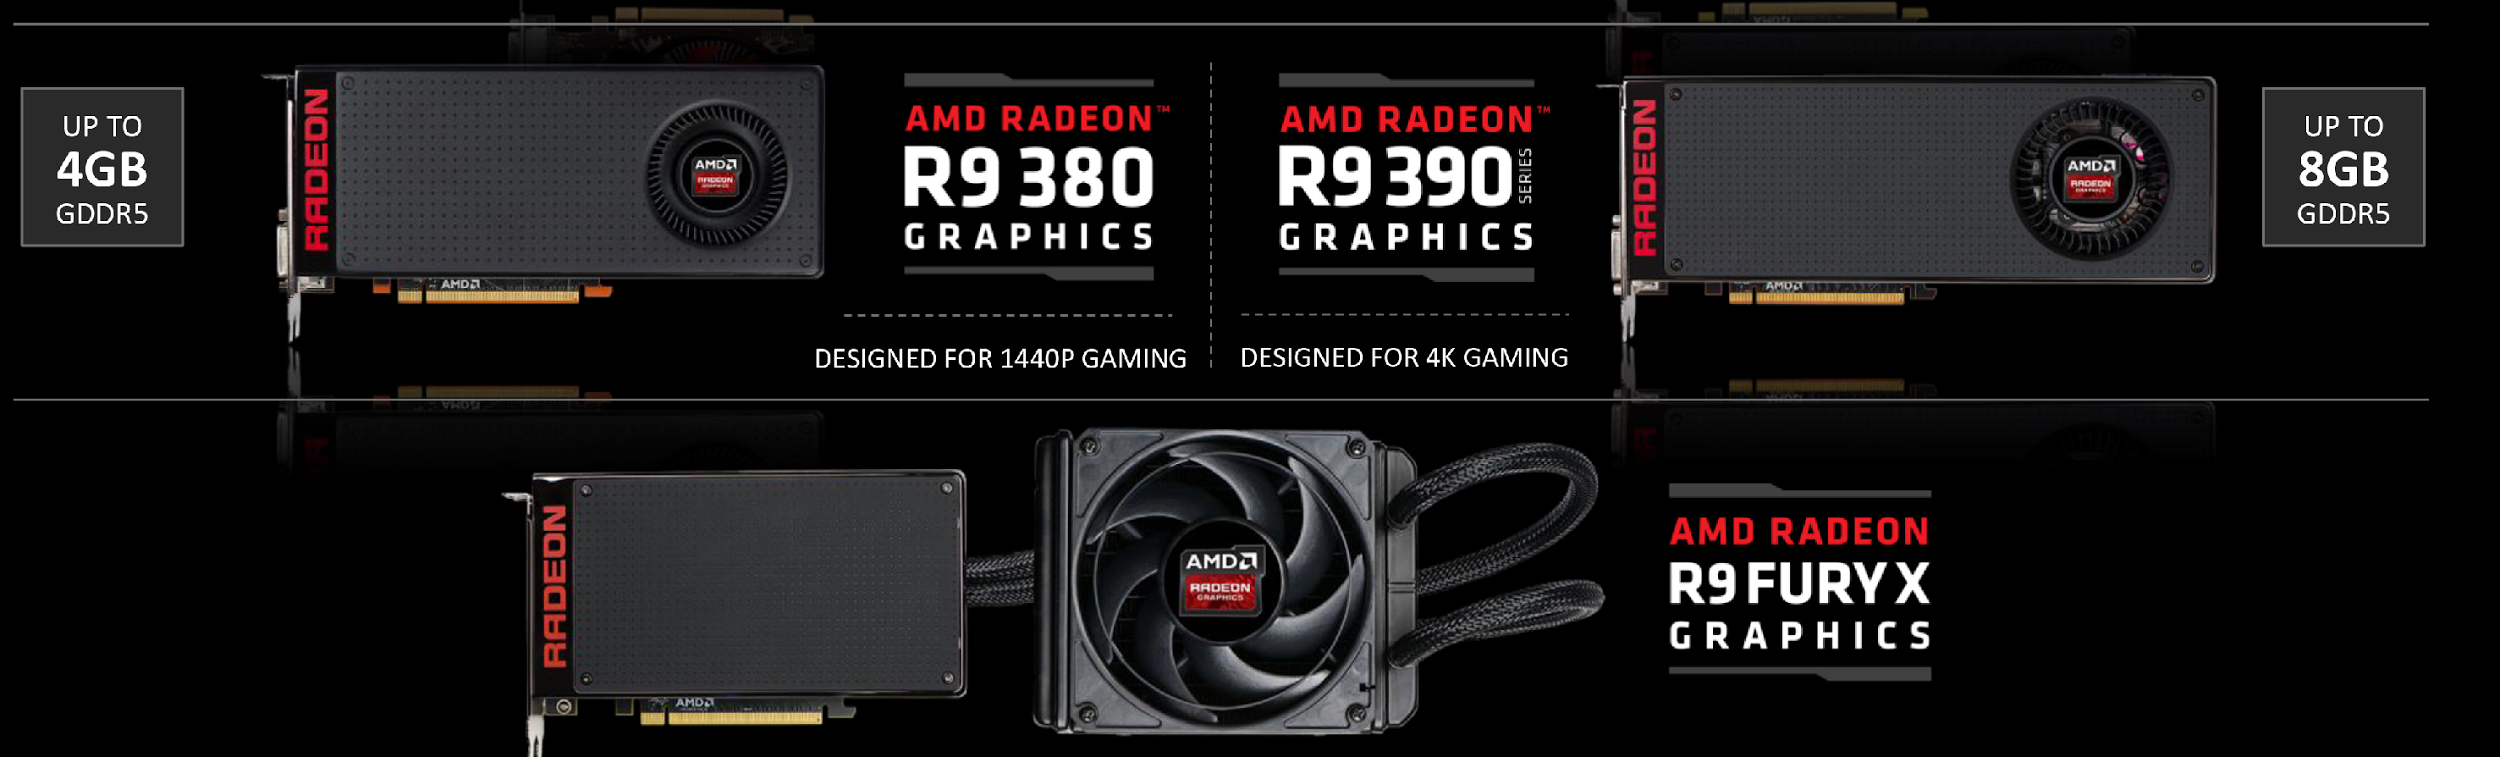 Рис. 1. Разнообразие видеокарт AMD Radeon